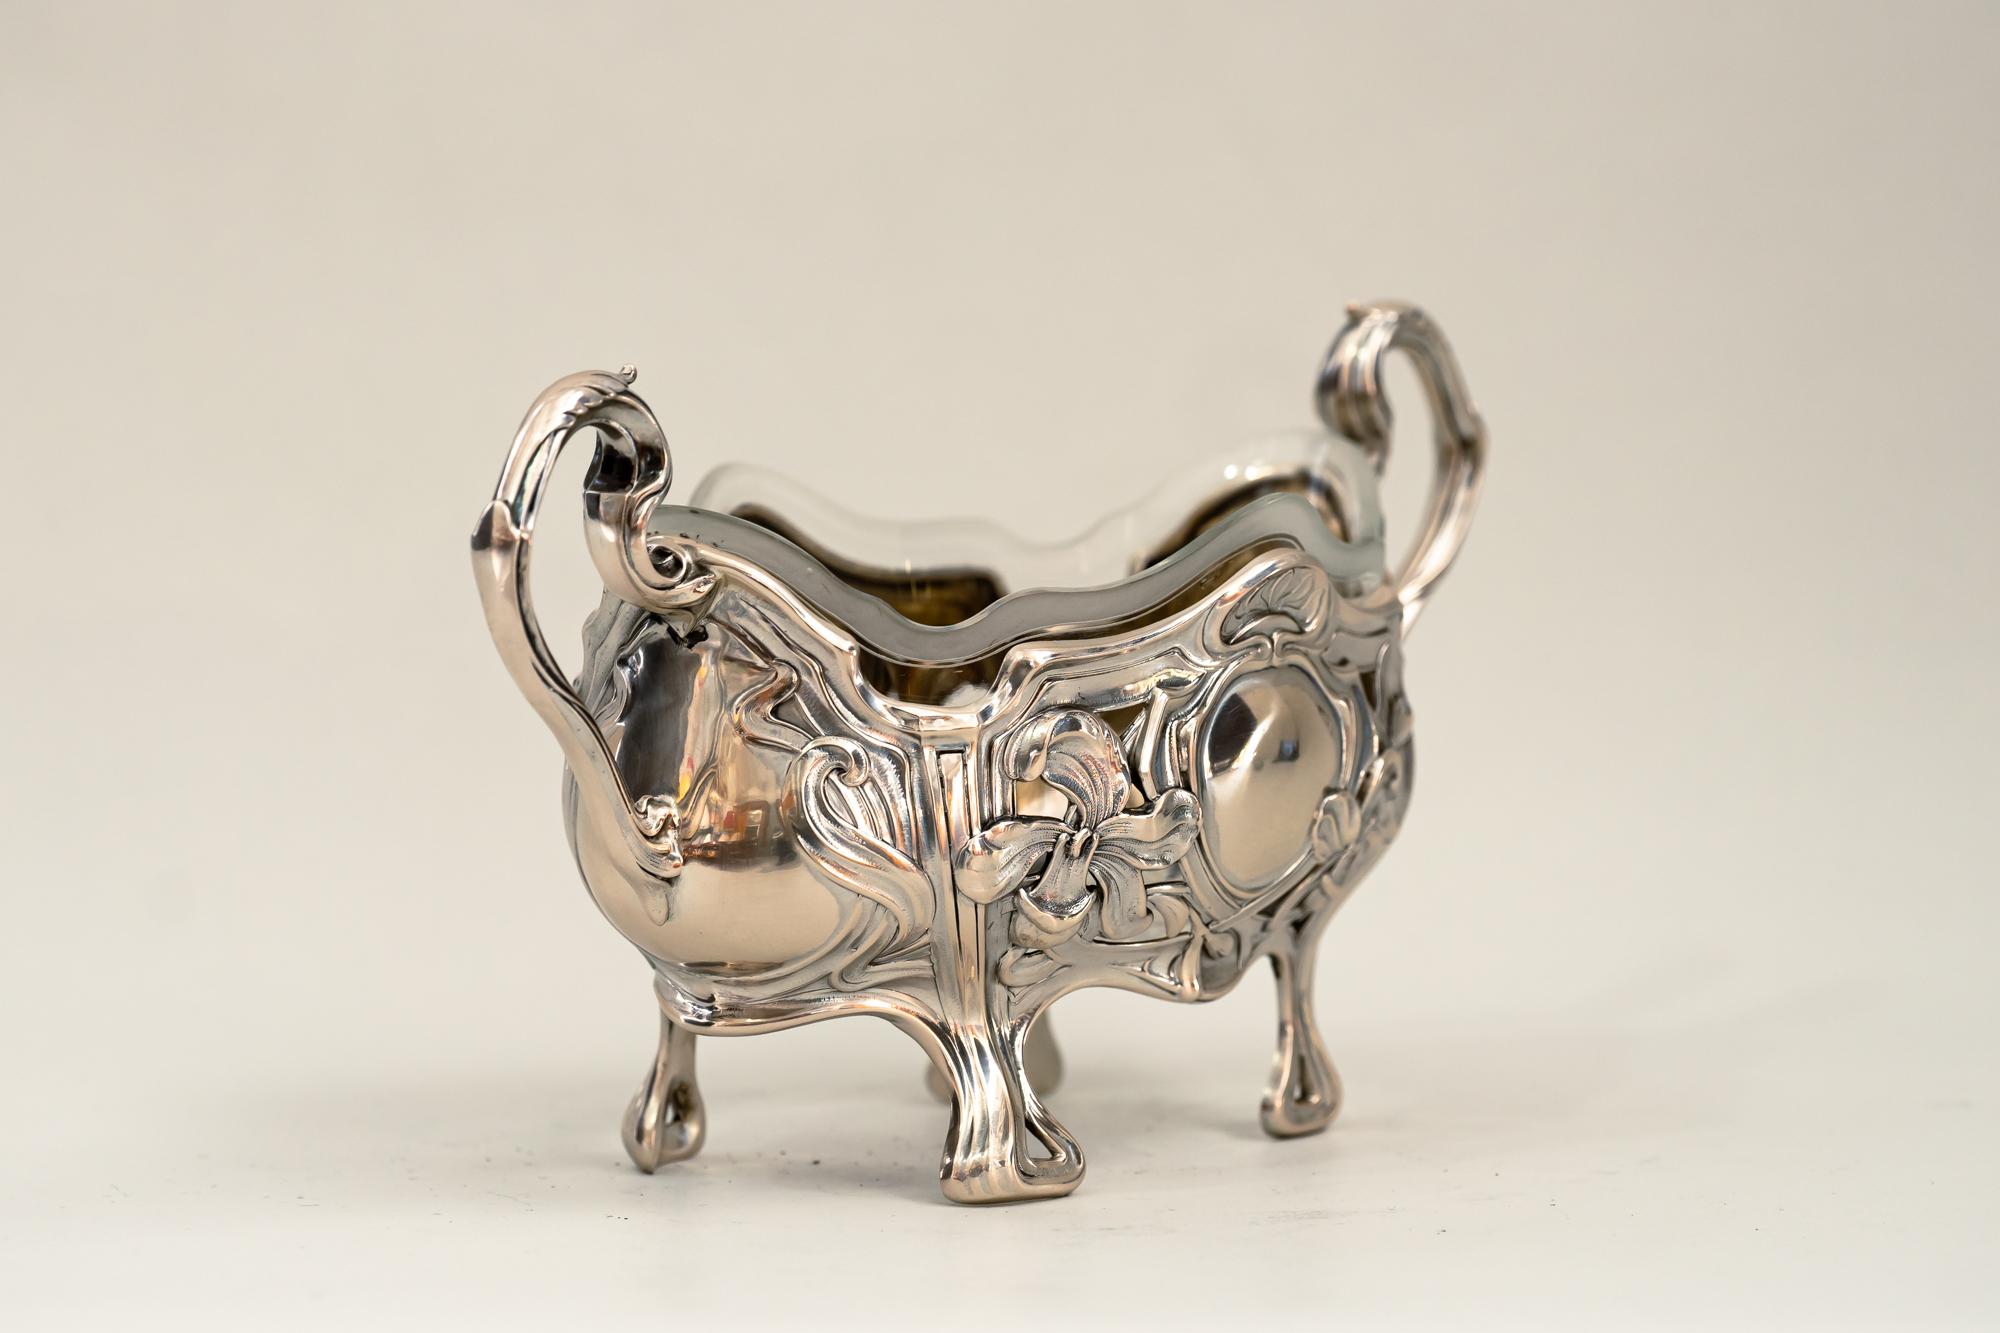 Jugendstil silver centerpiece with original glass germany around 1905
Polished and stove enamelled
Original glass.